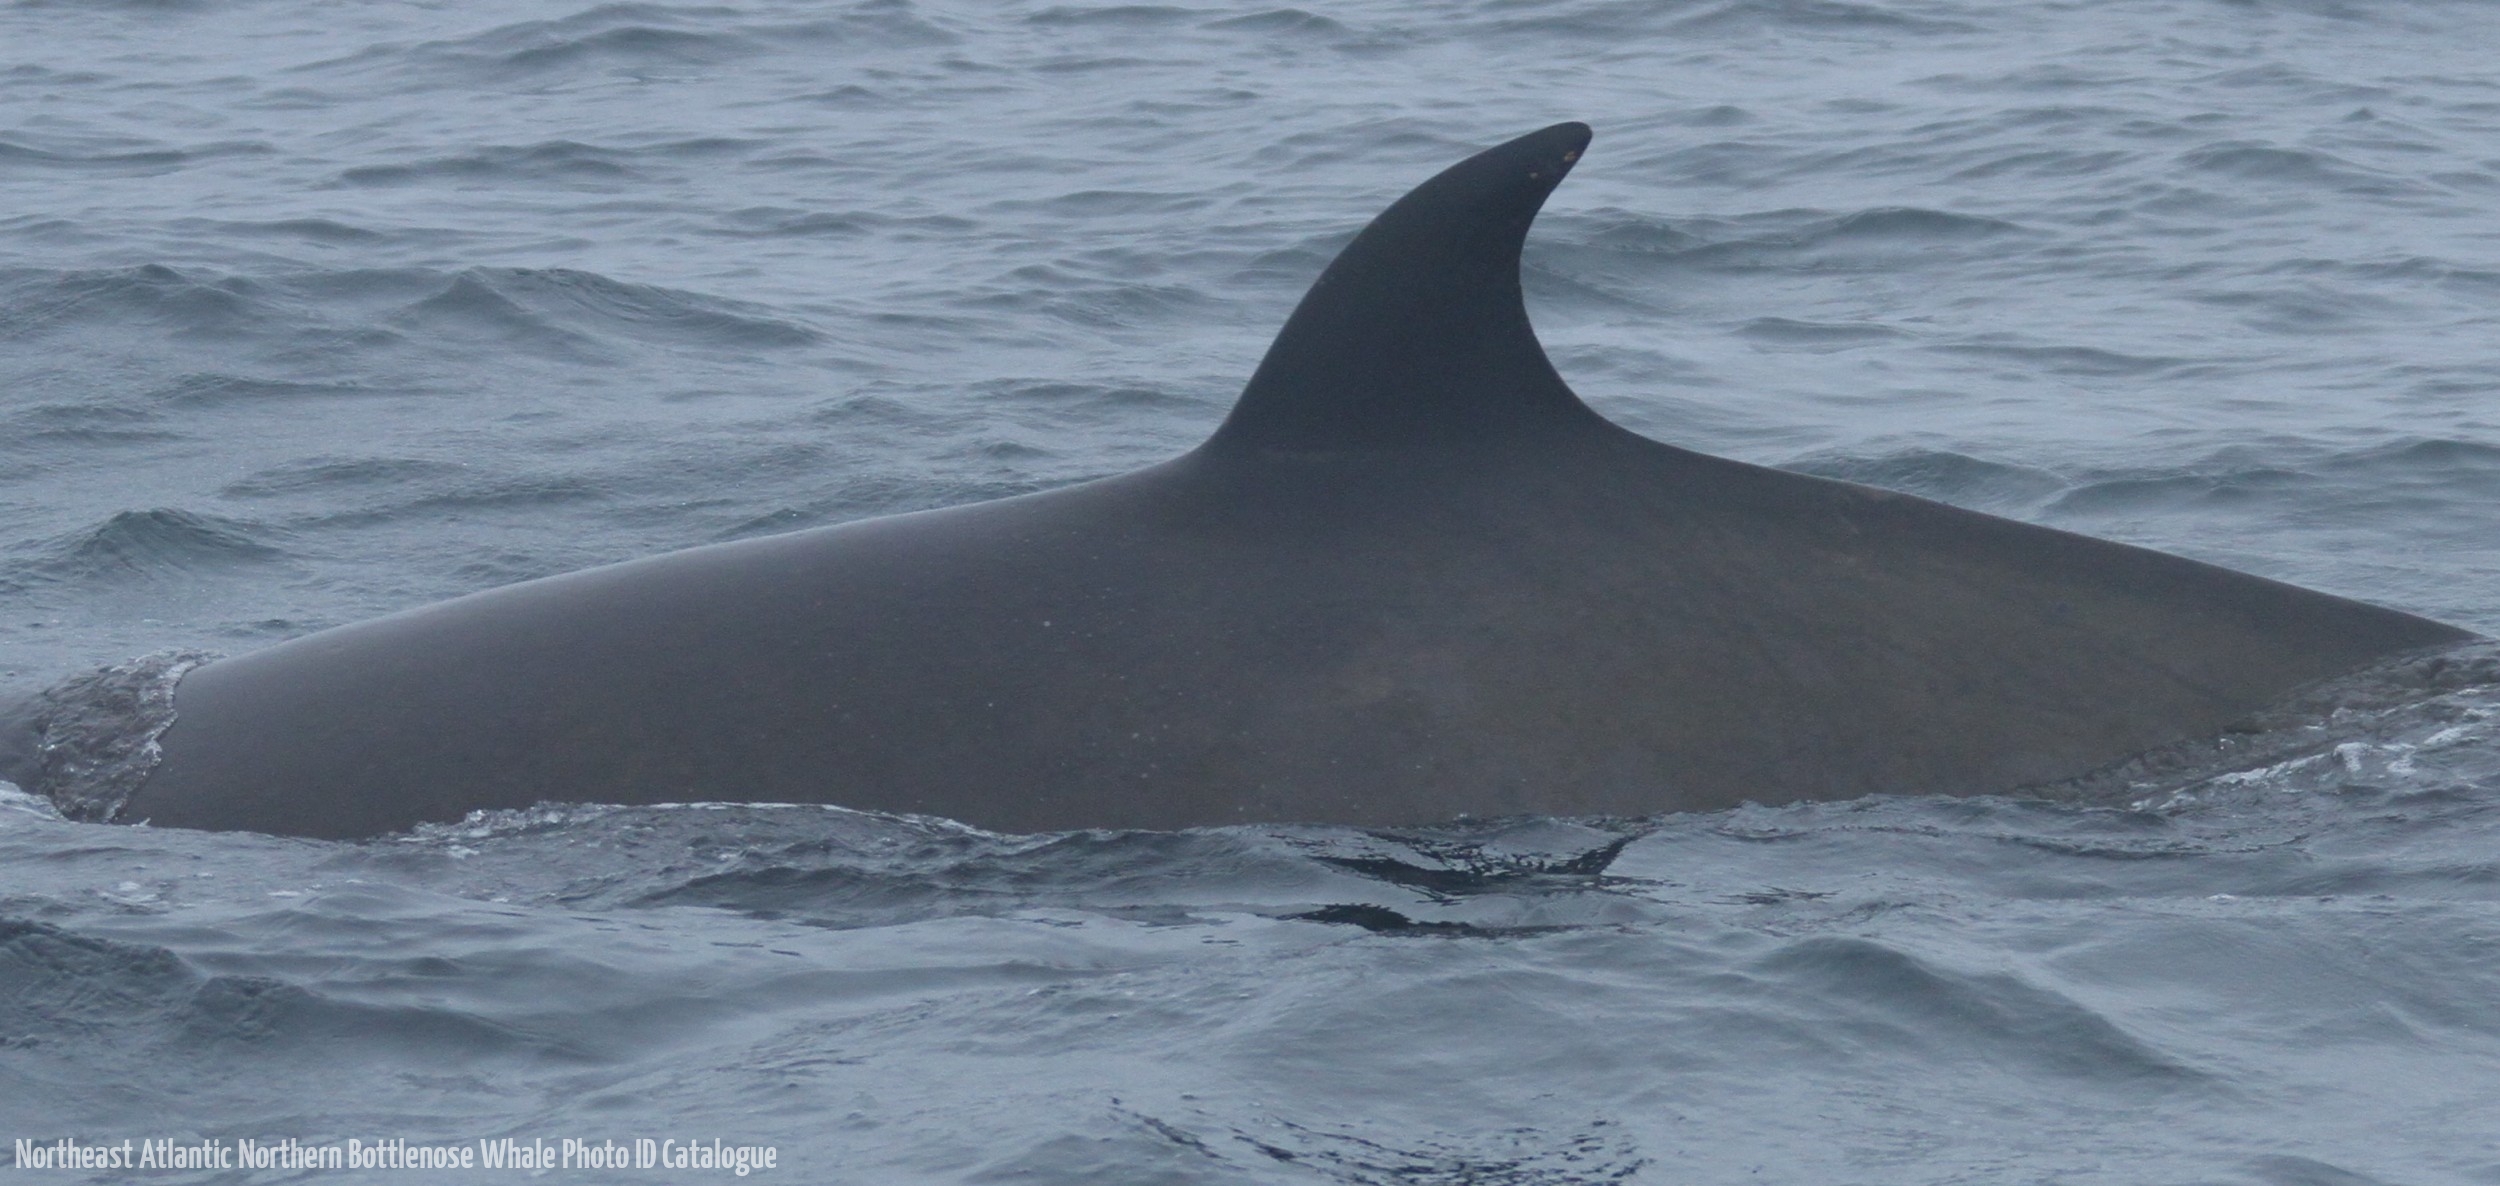 Whale ID: 0002,  Date taken: 24-06-2013,  Photographer: Paul H. Ensor